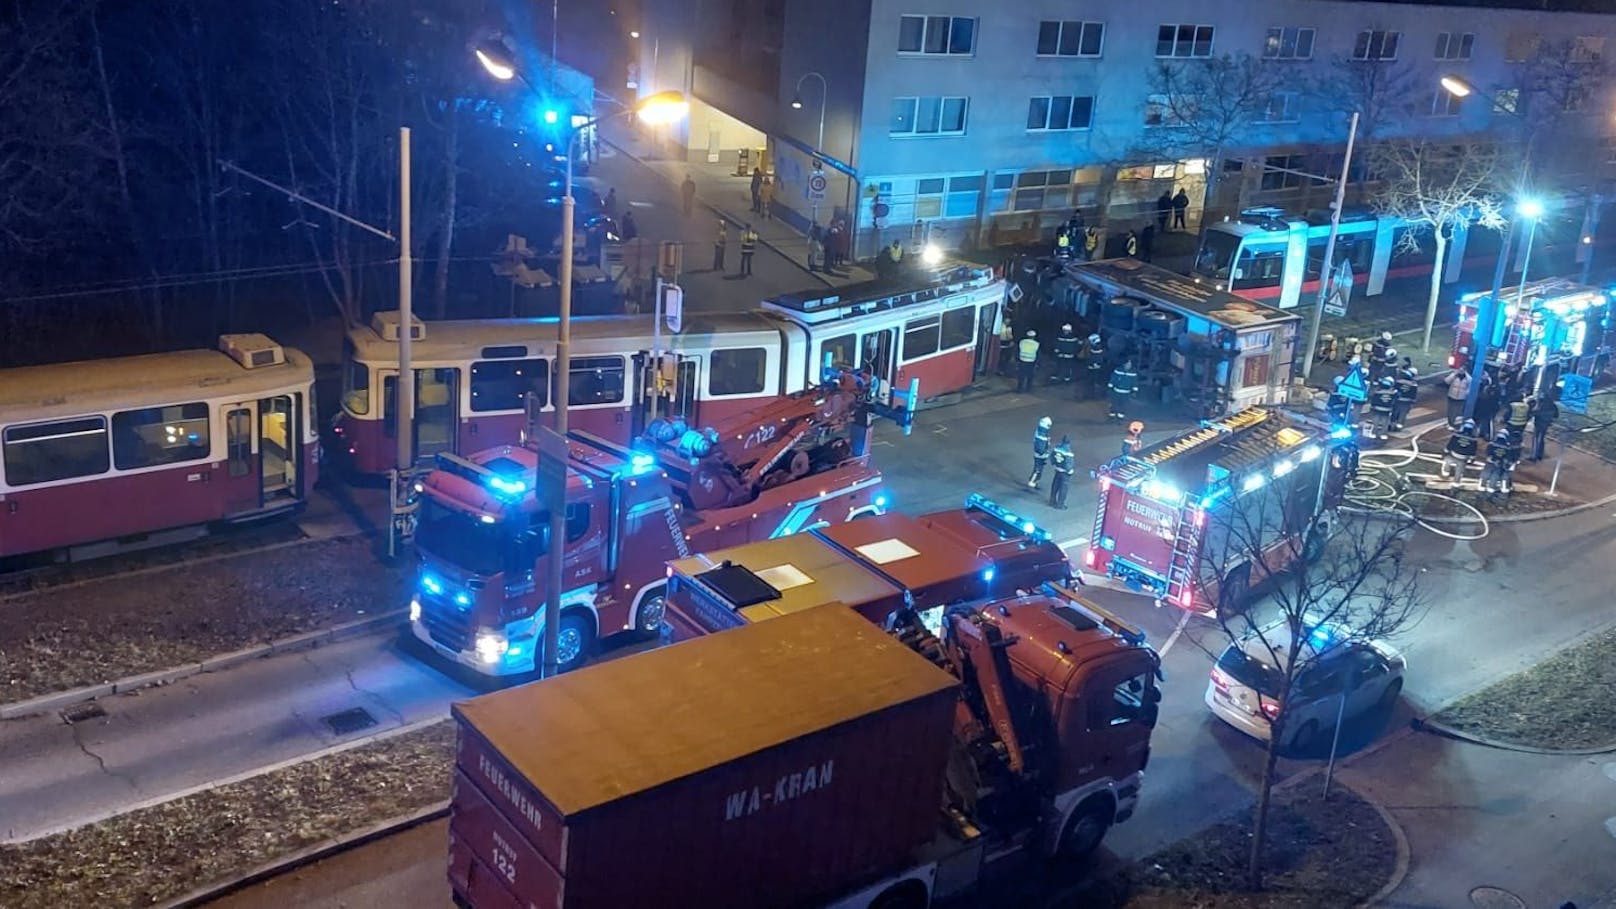 Bim rammt Supermarkt-Lkw in Wien – 5 Personen verletzt